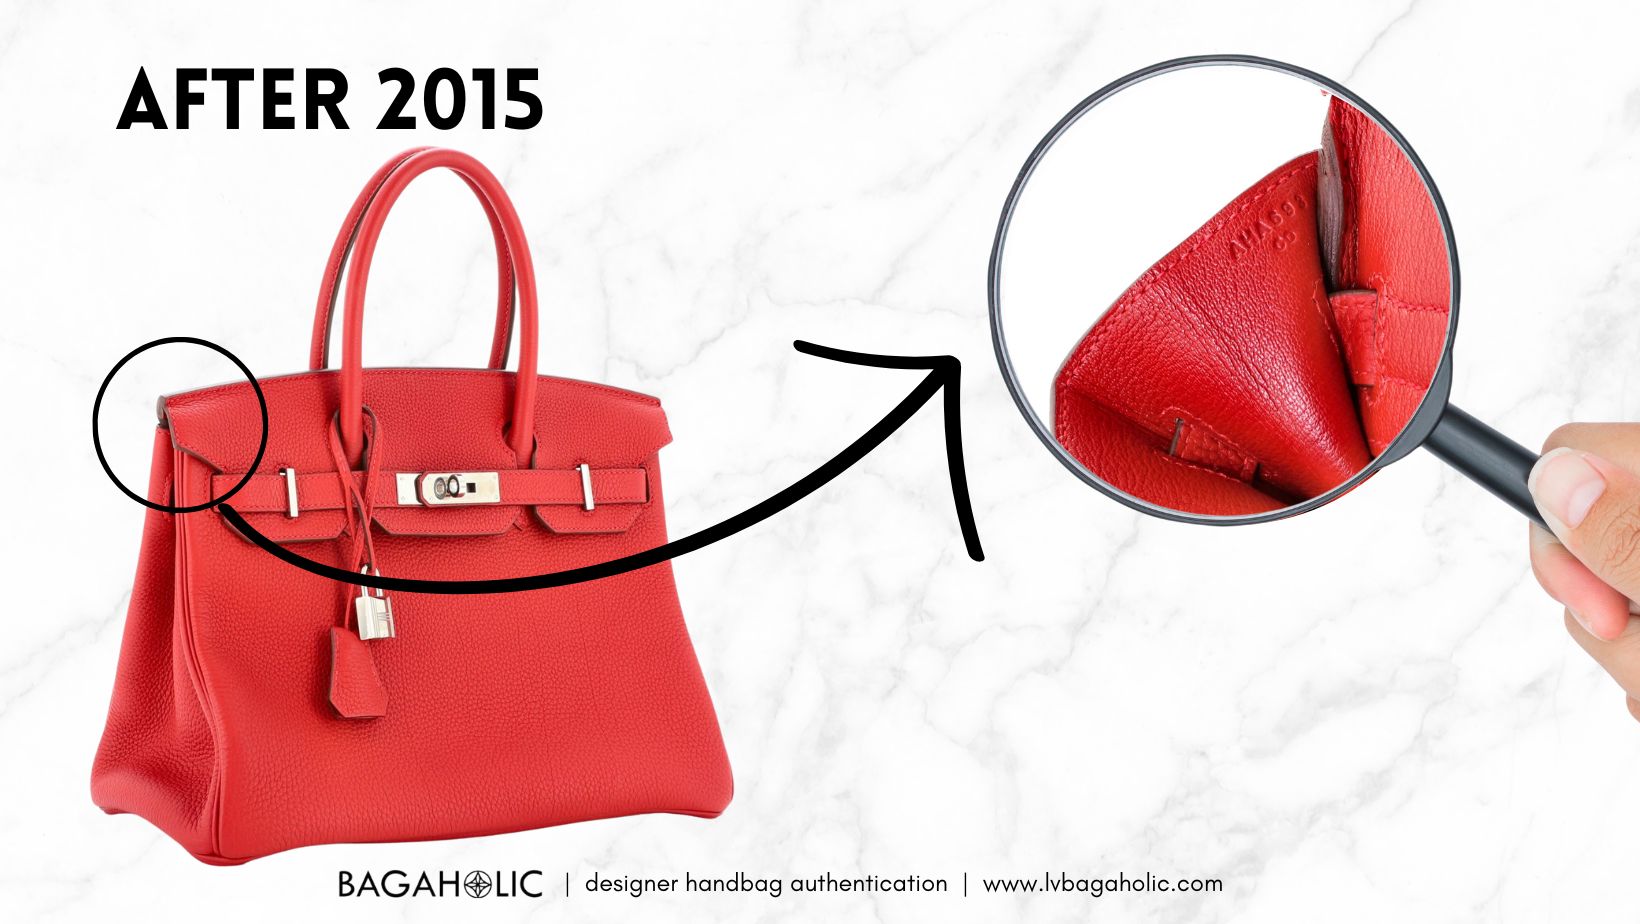 This diamond-encrusted Hermès Birkin bag is priced at 220,000